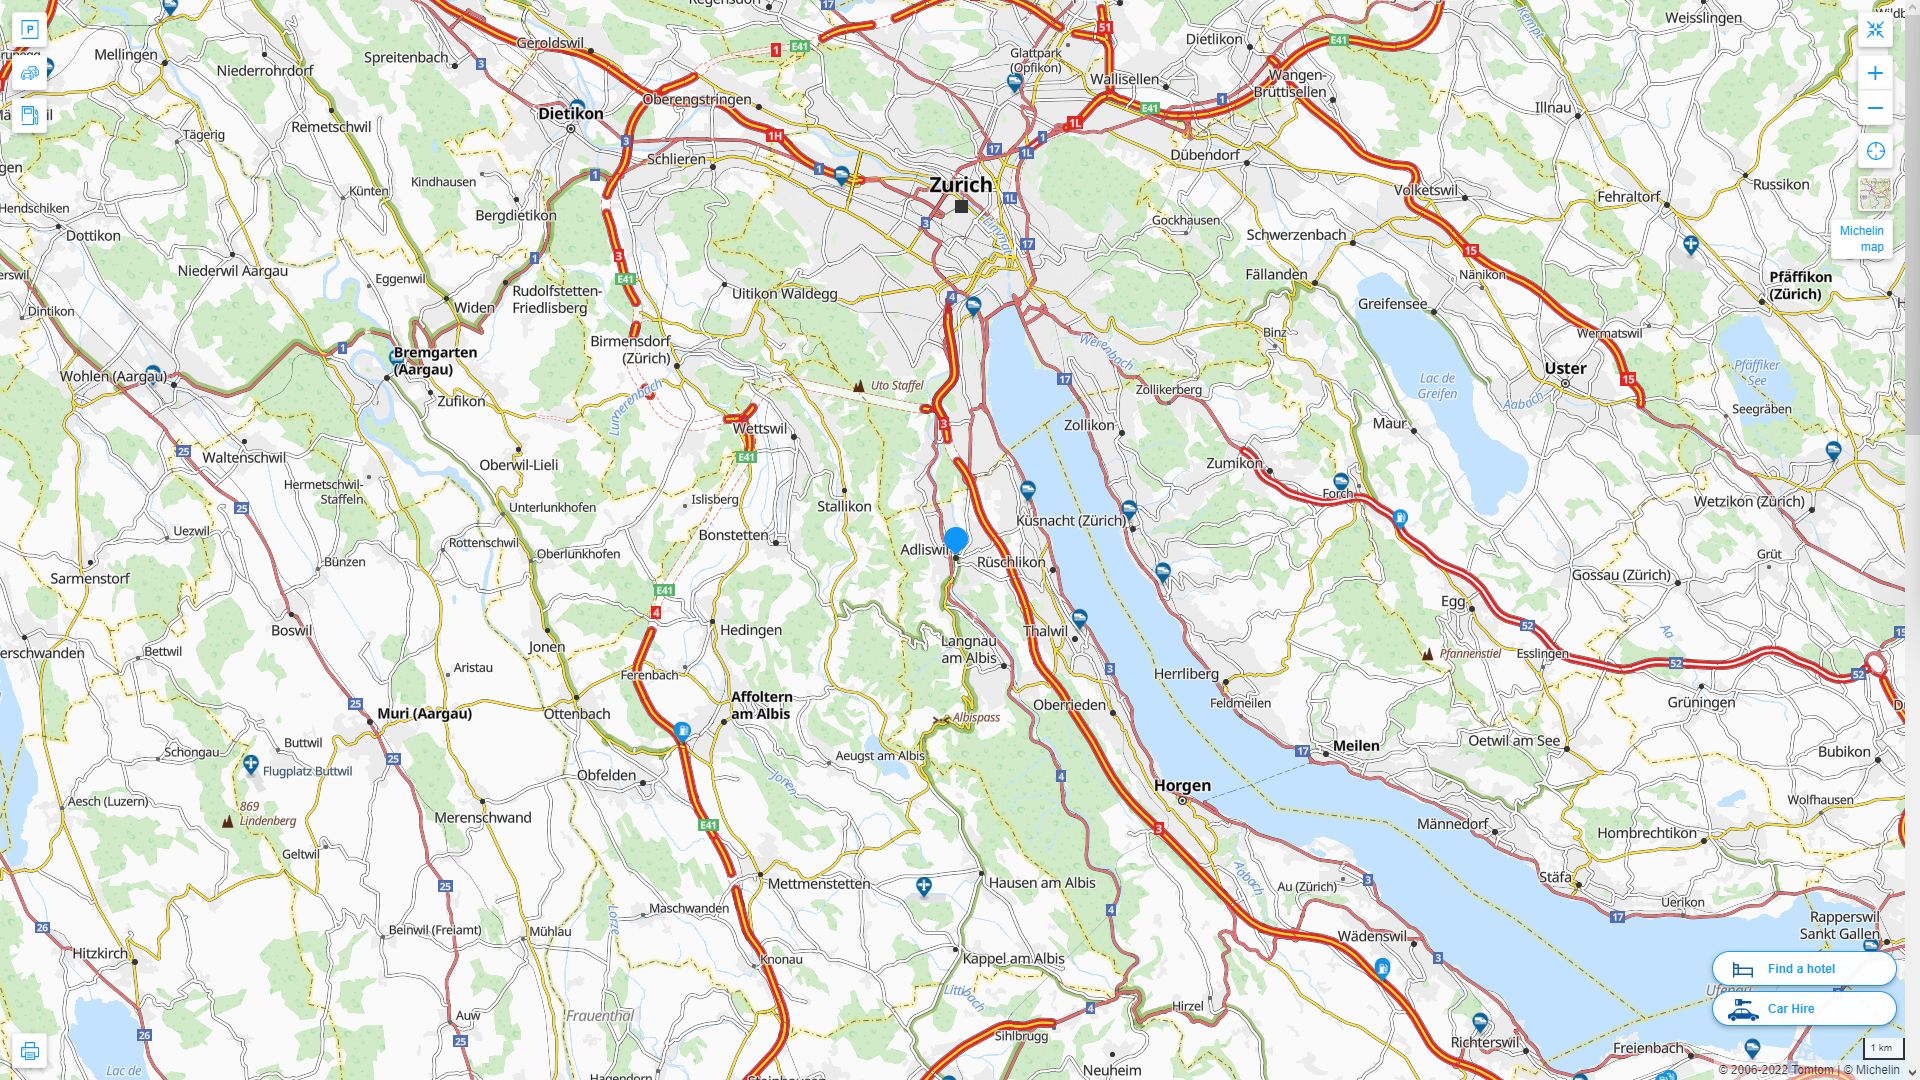 Adliswil Suisse Autoroute et carte routiere